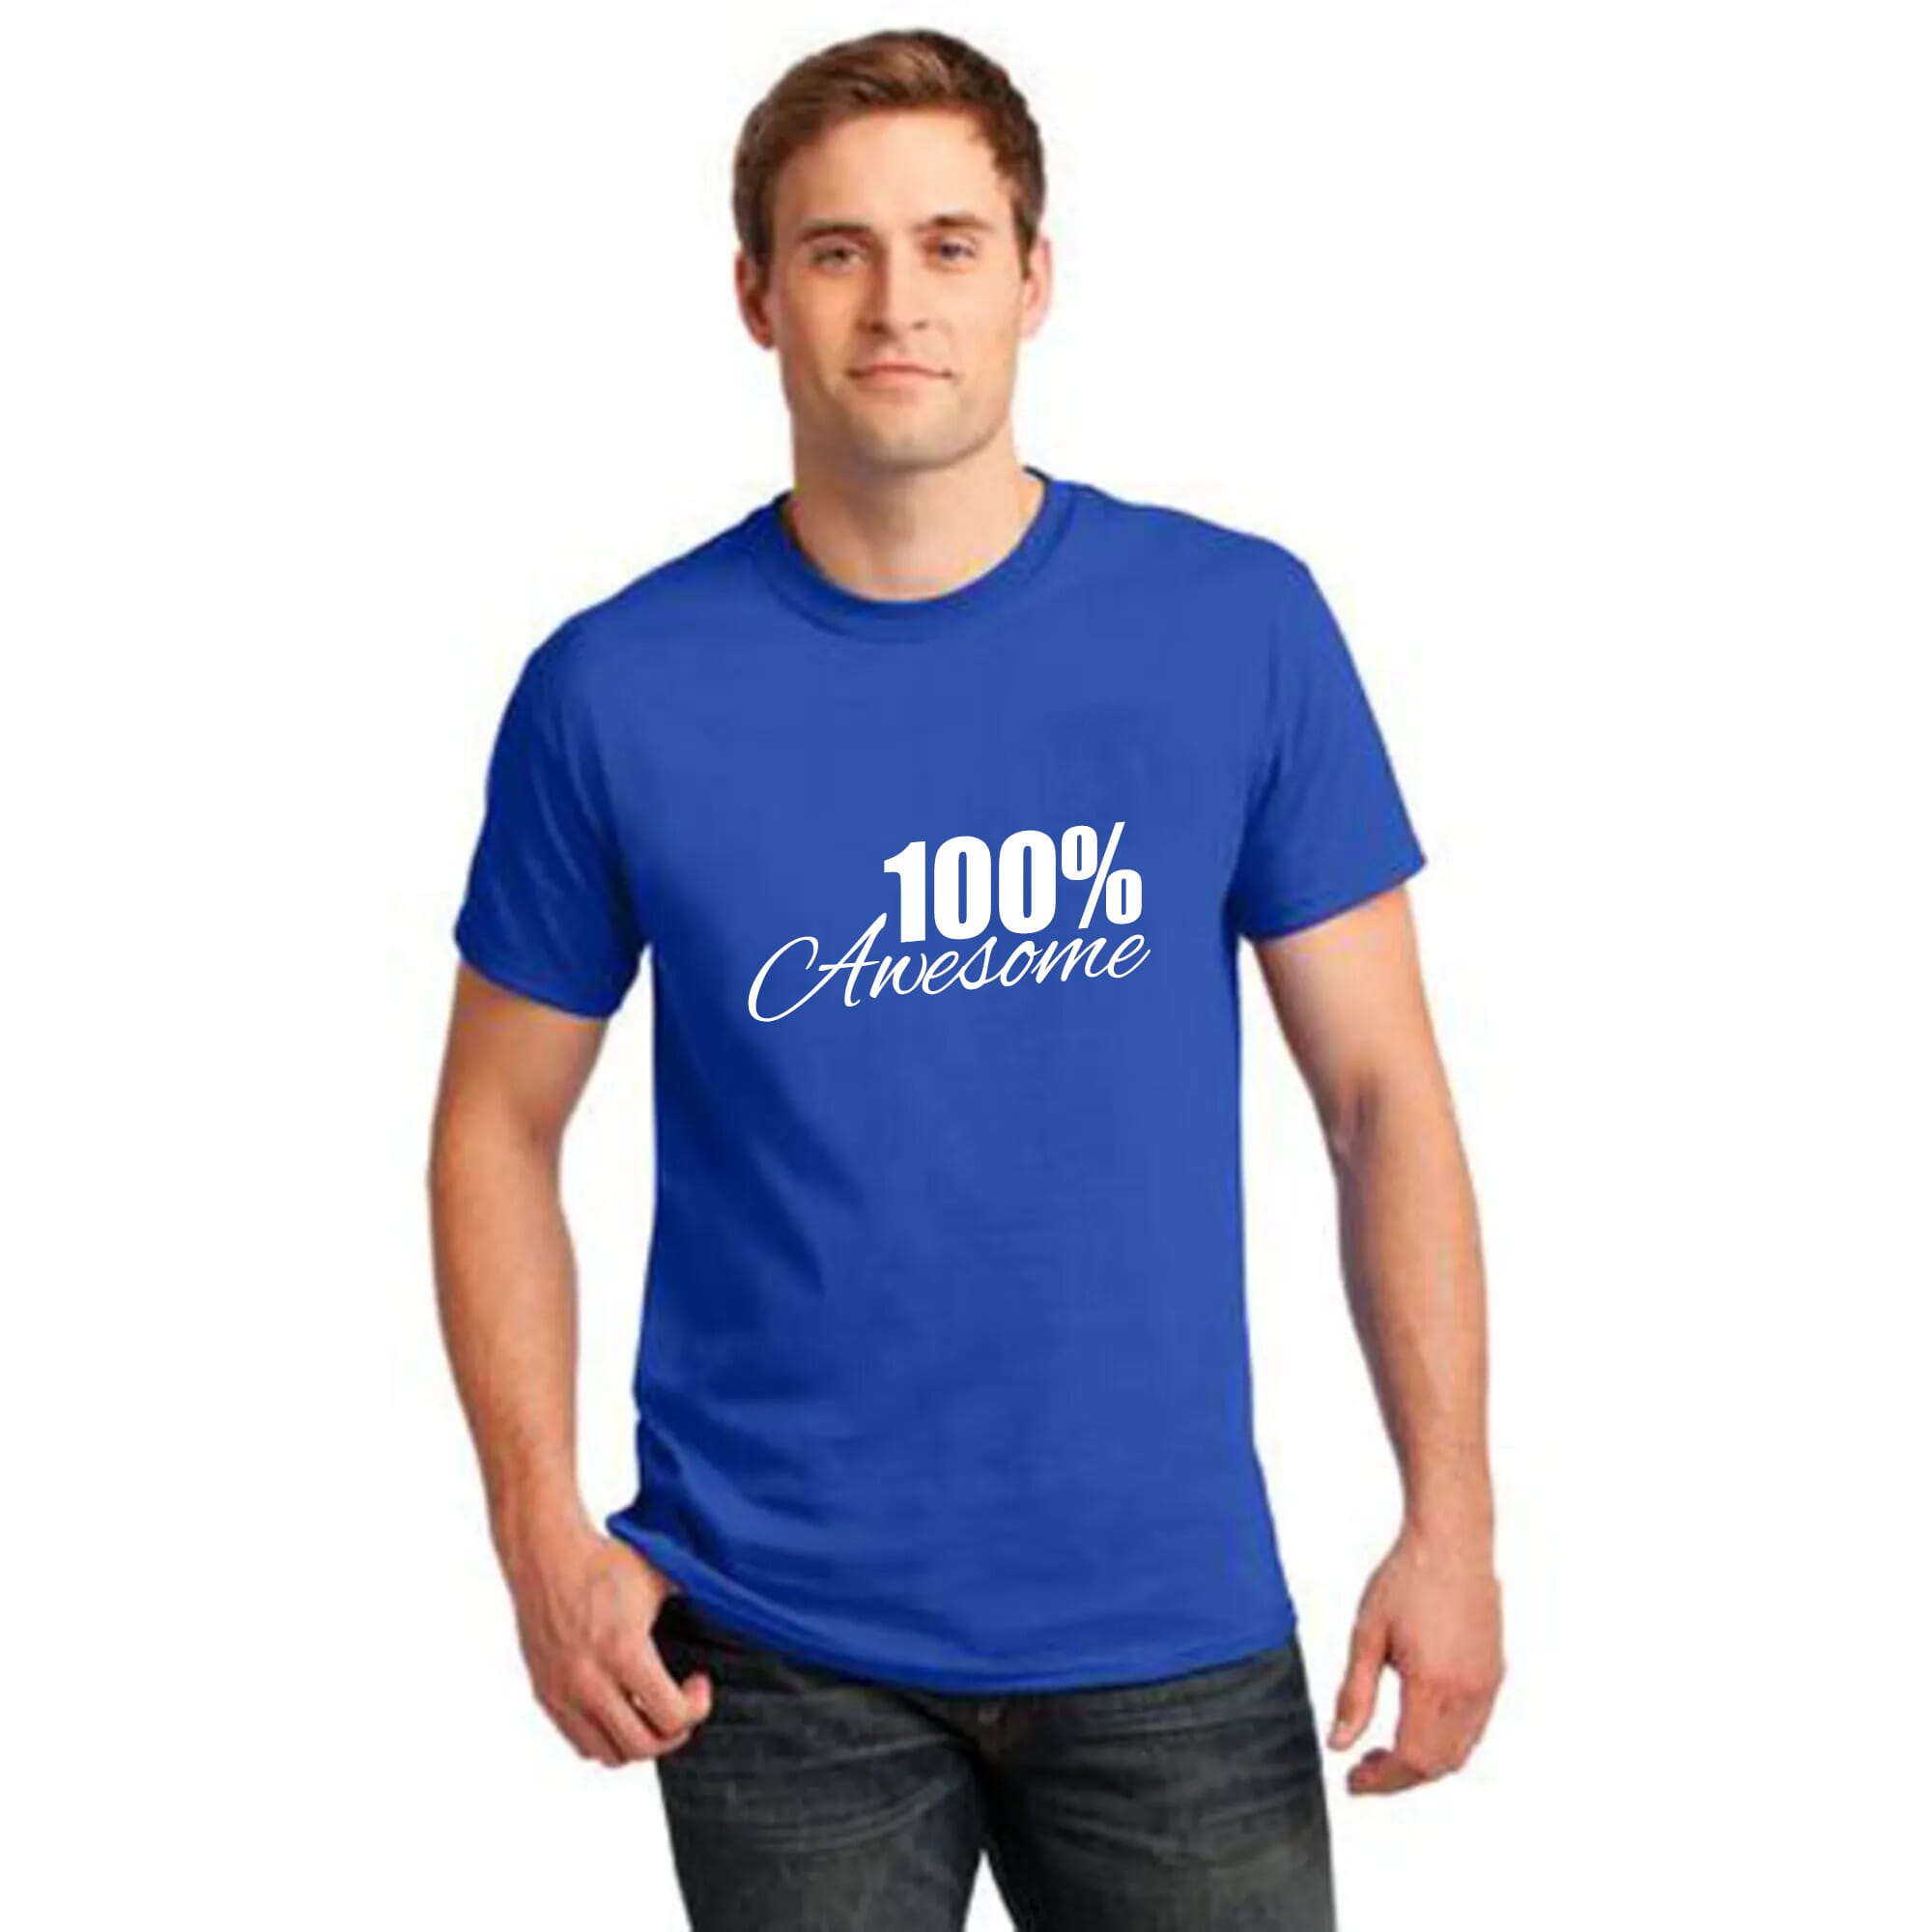 Blue heathered t-shirt